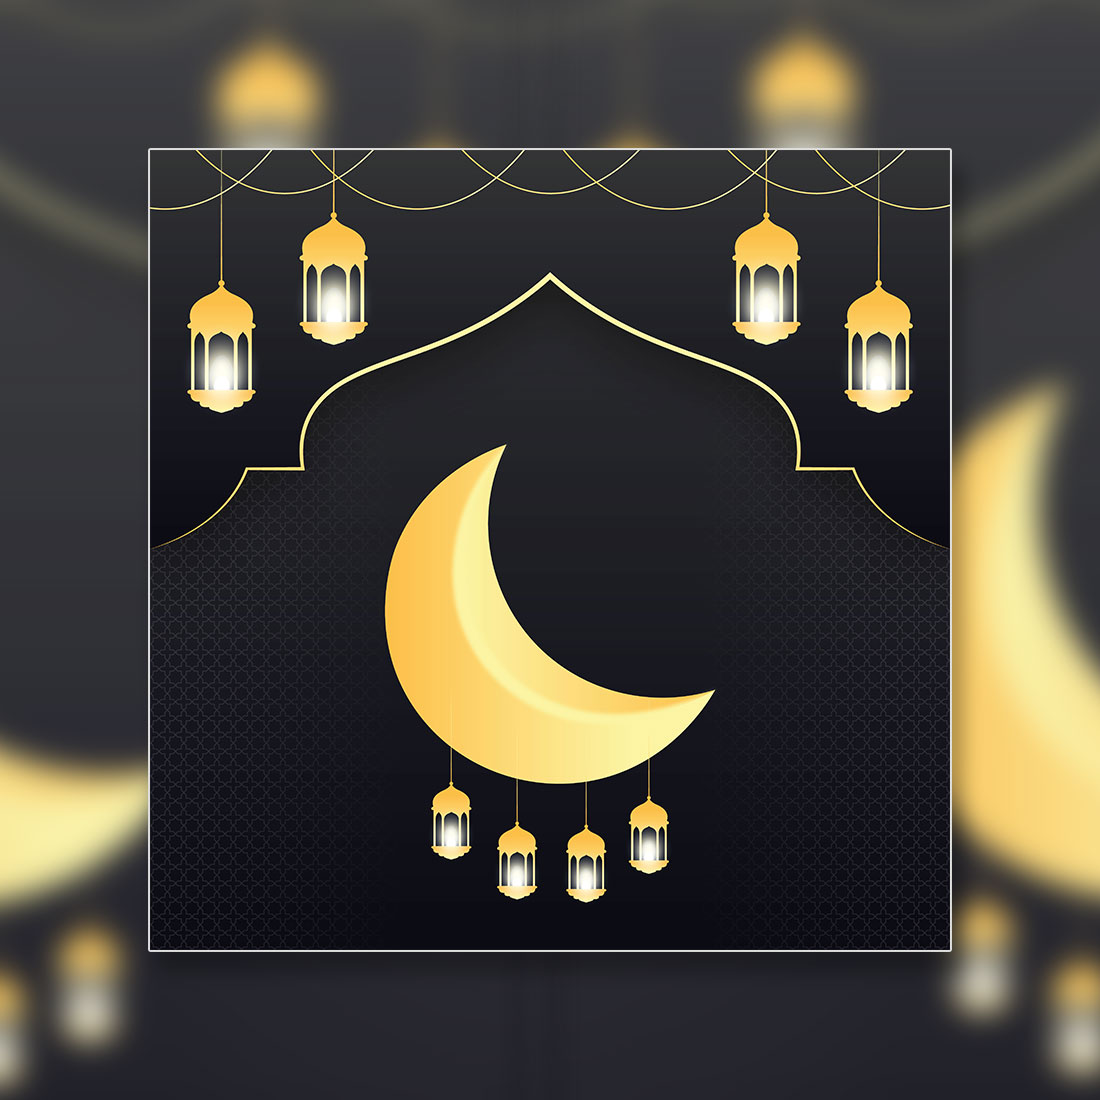 Ramadan Kareem greeting card with Islamic background cover image.